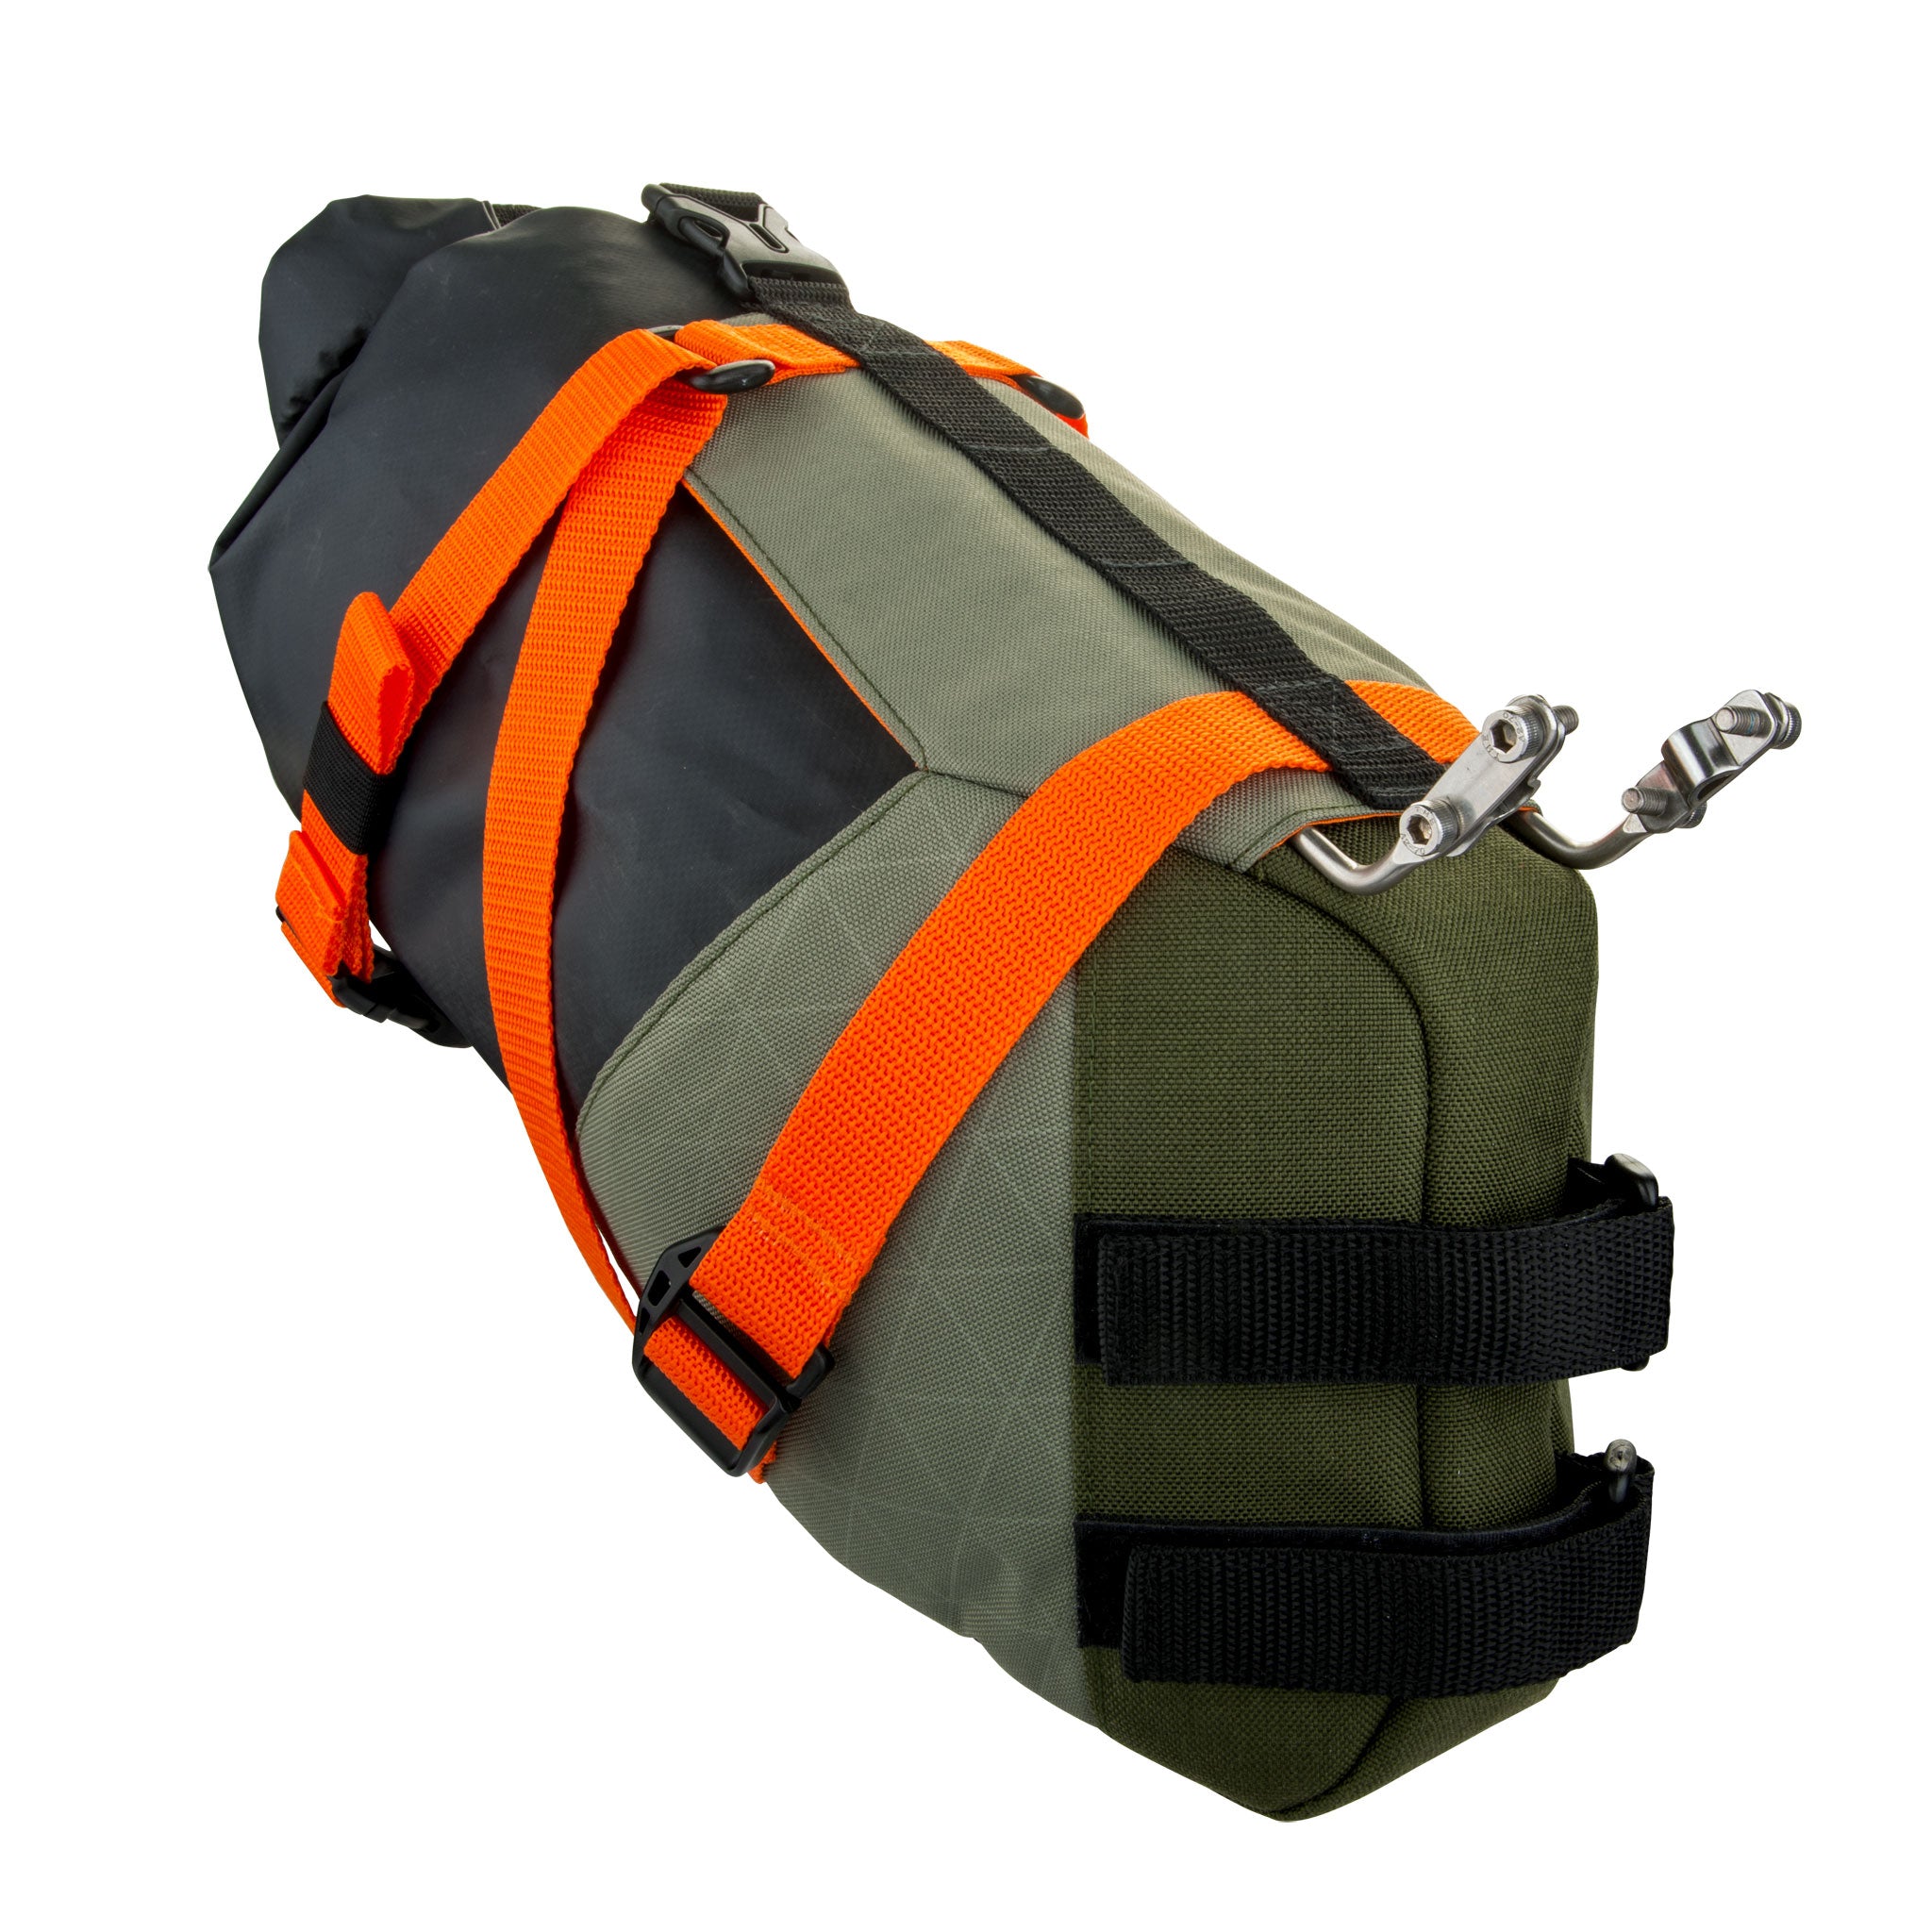 Birzman Waterproof Packman Travel Saddle Pack 6L Green/Orang